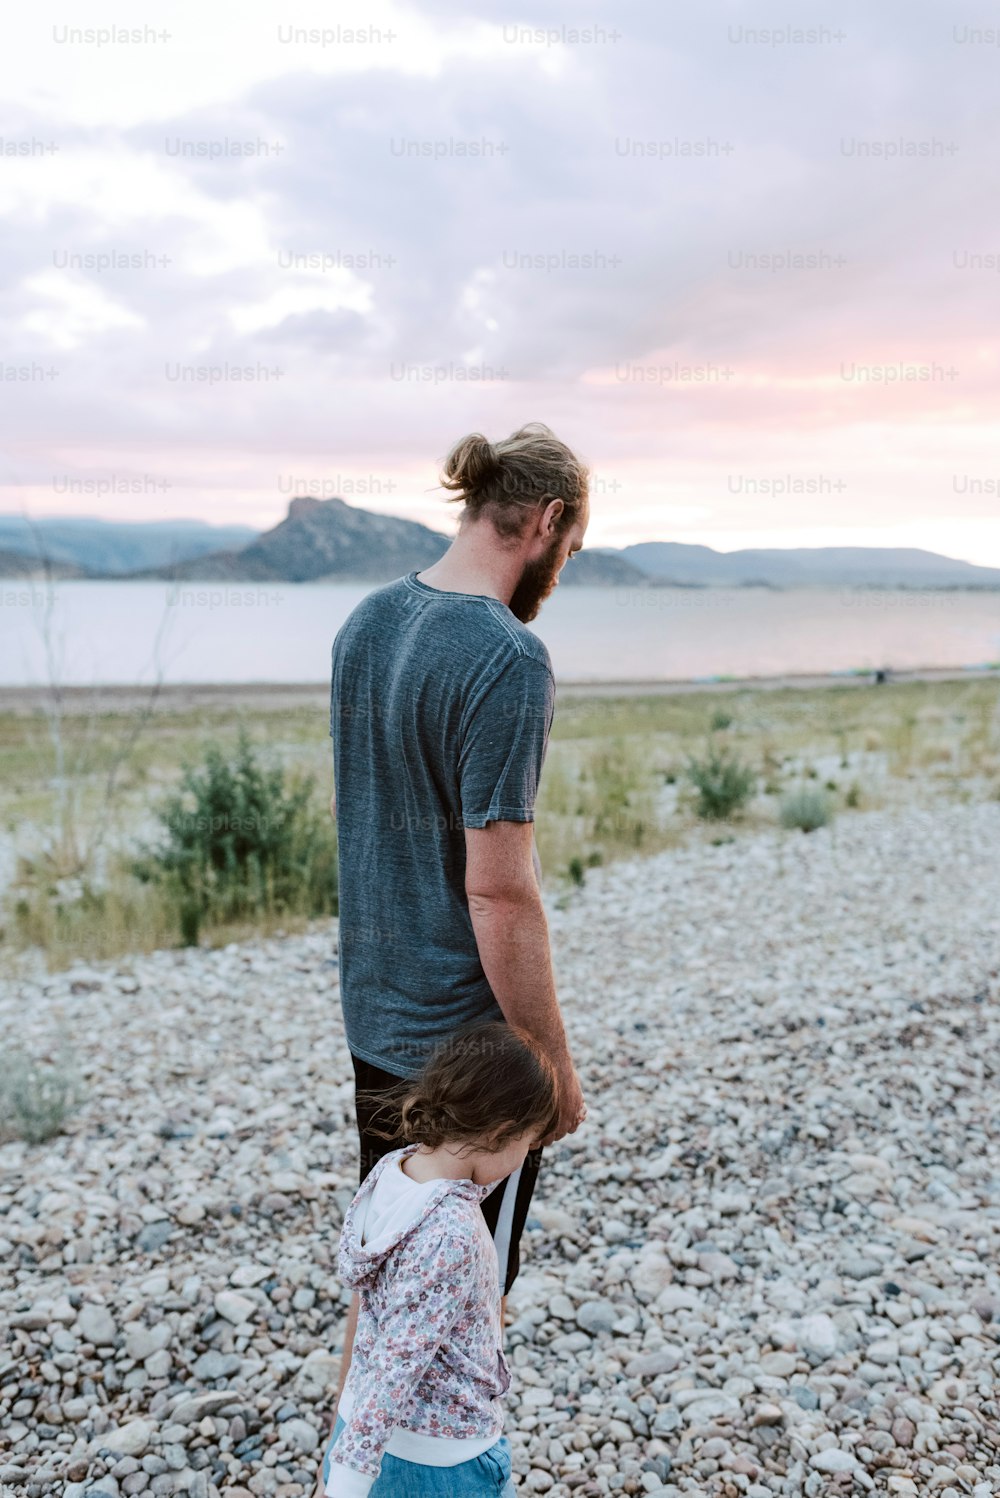 a man holding a little girl's hand on a rocky beach